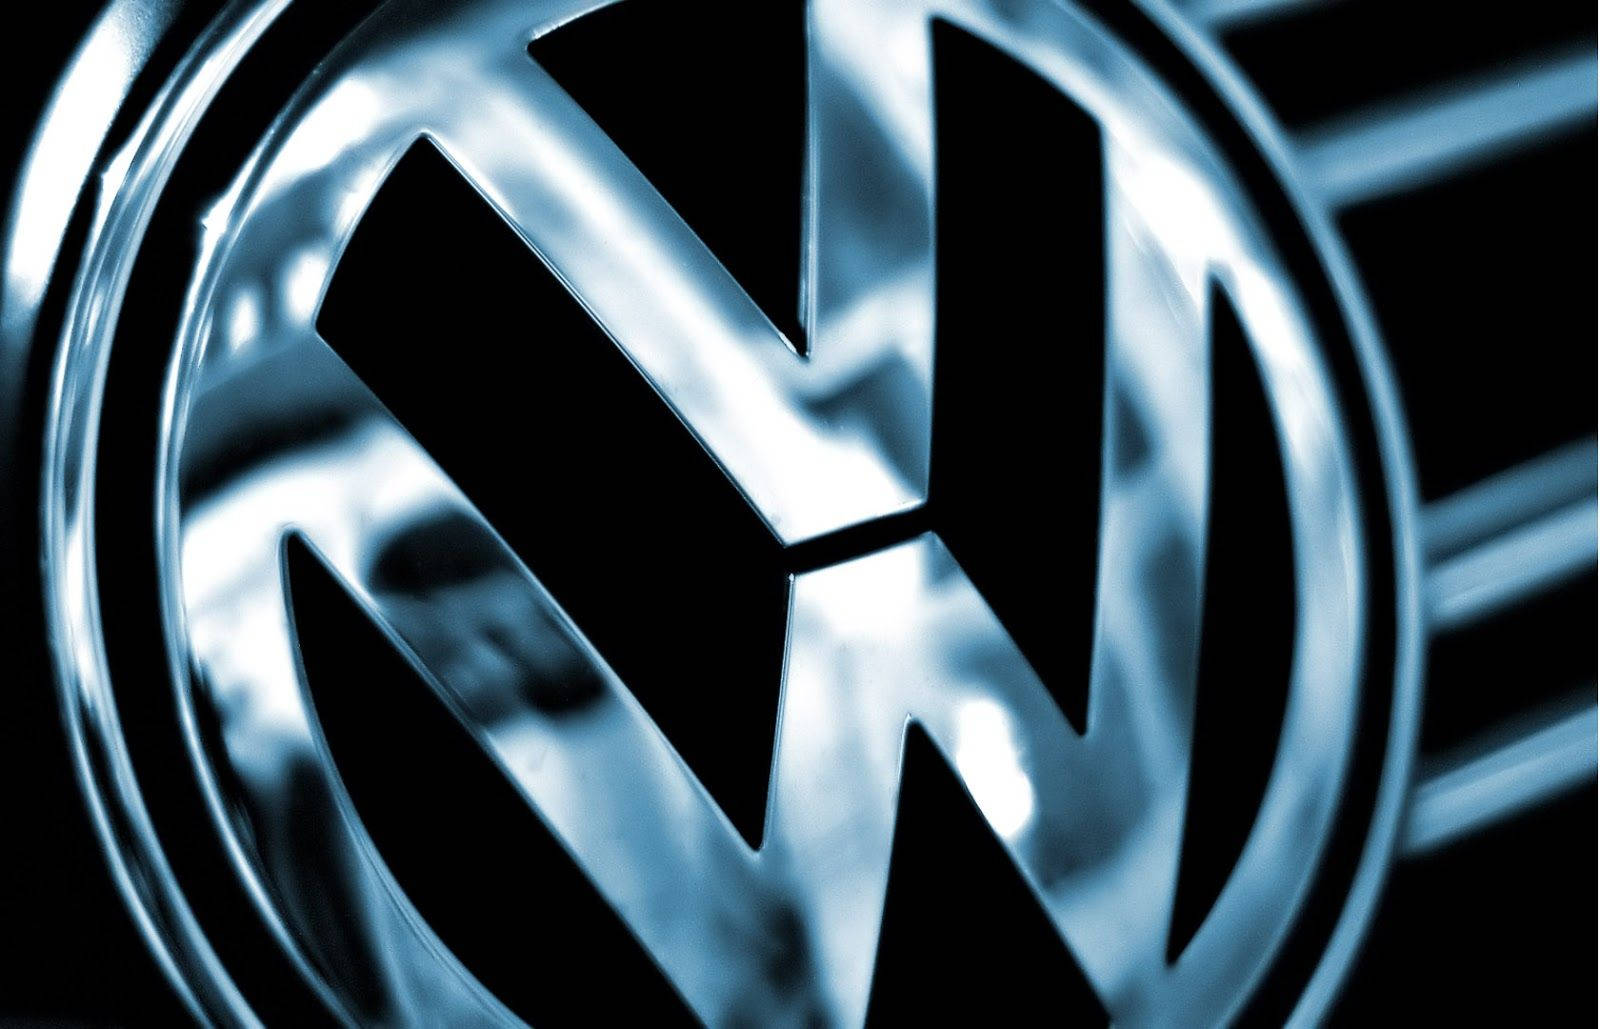 Volkswagen Wallpaper 1080p Q15ti4 Background